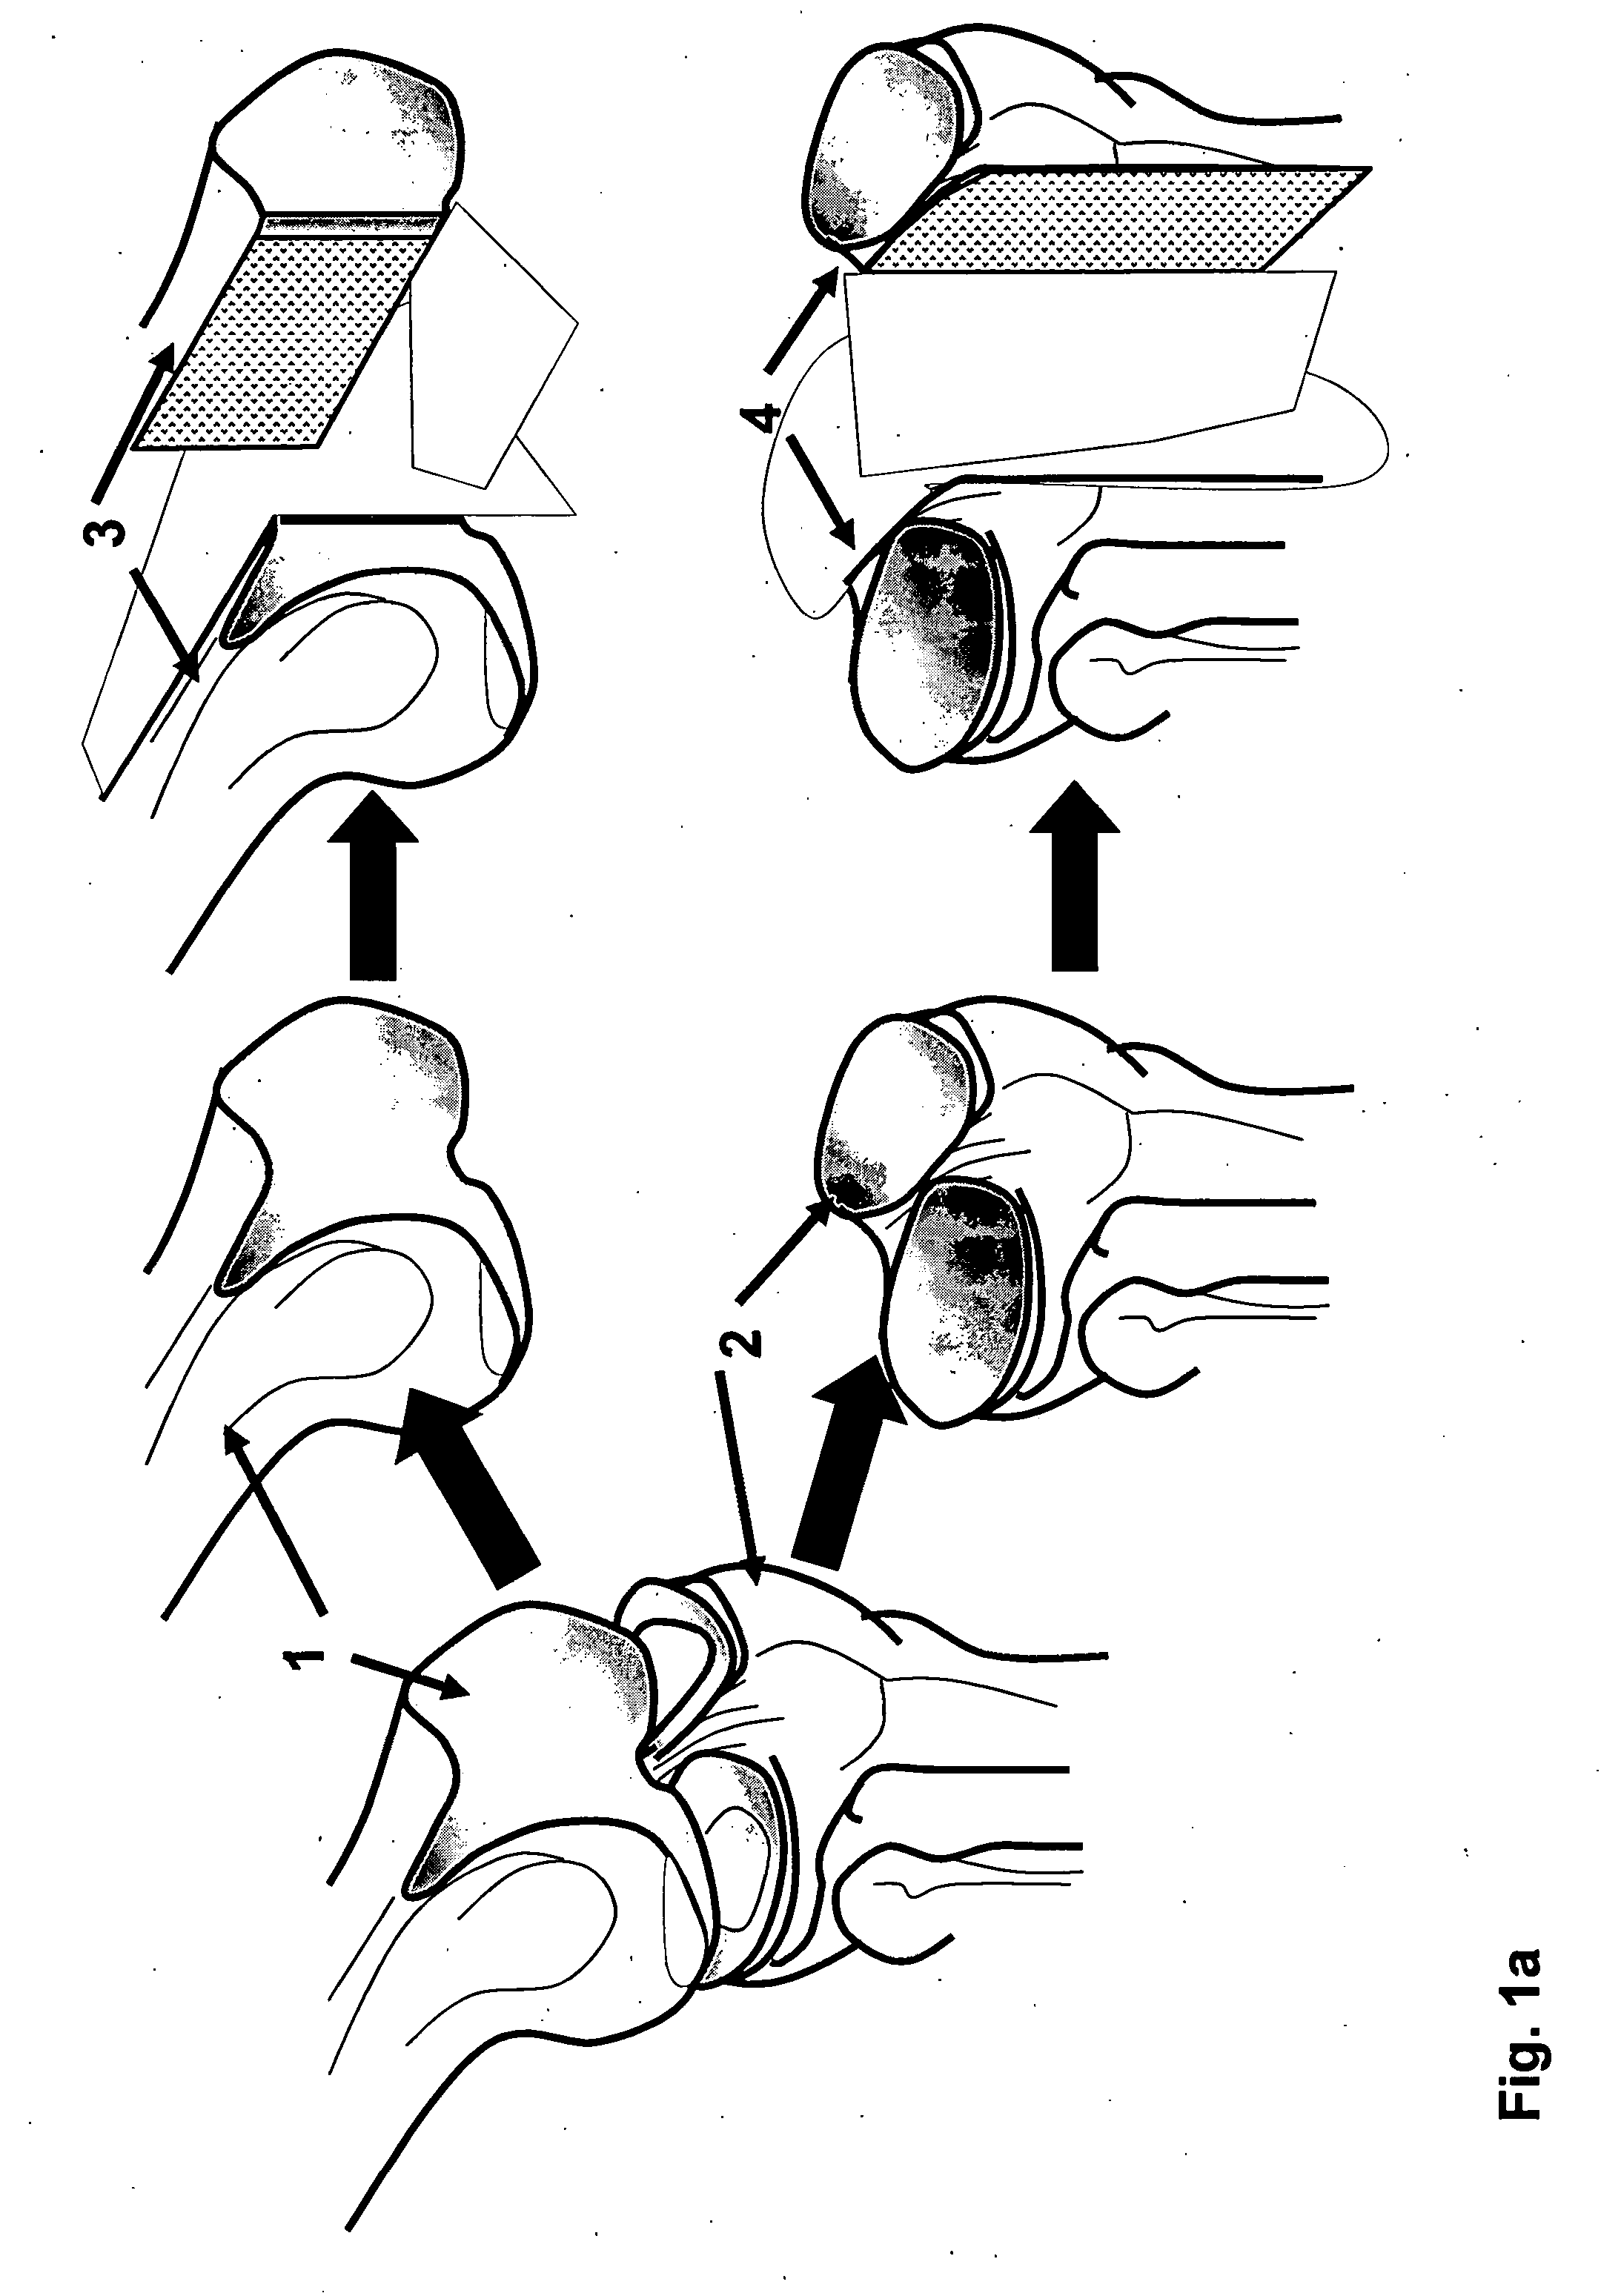 Implantation of Cartilage